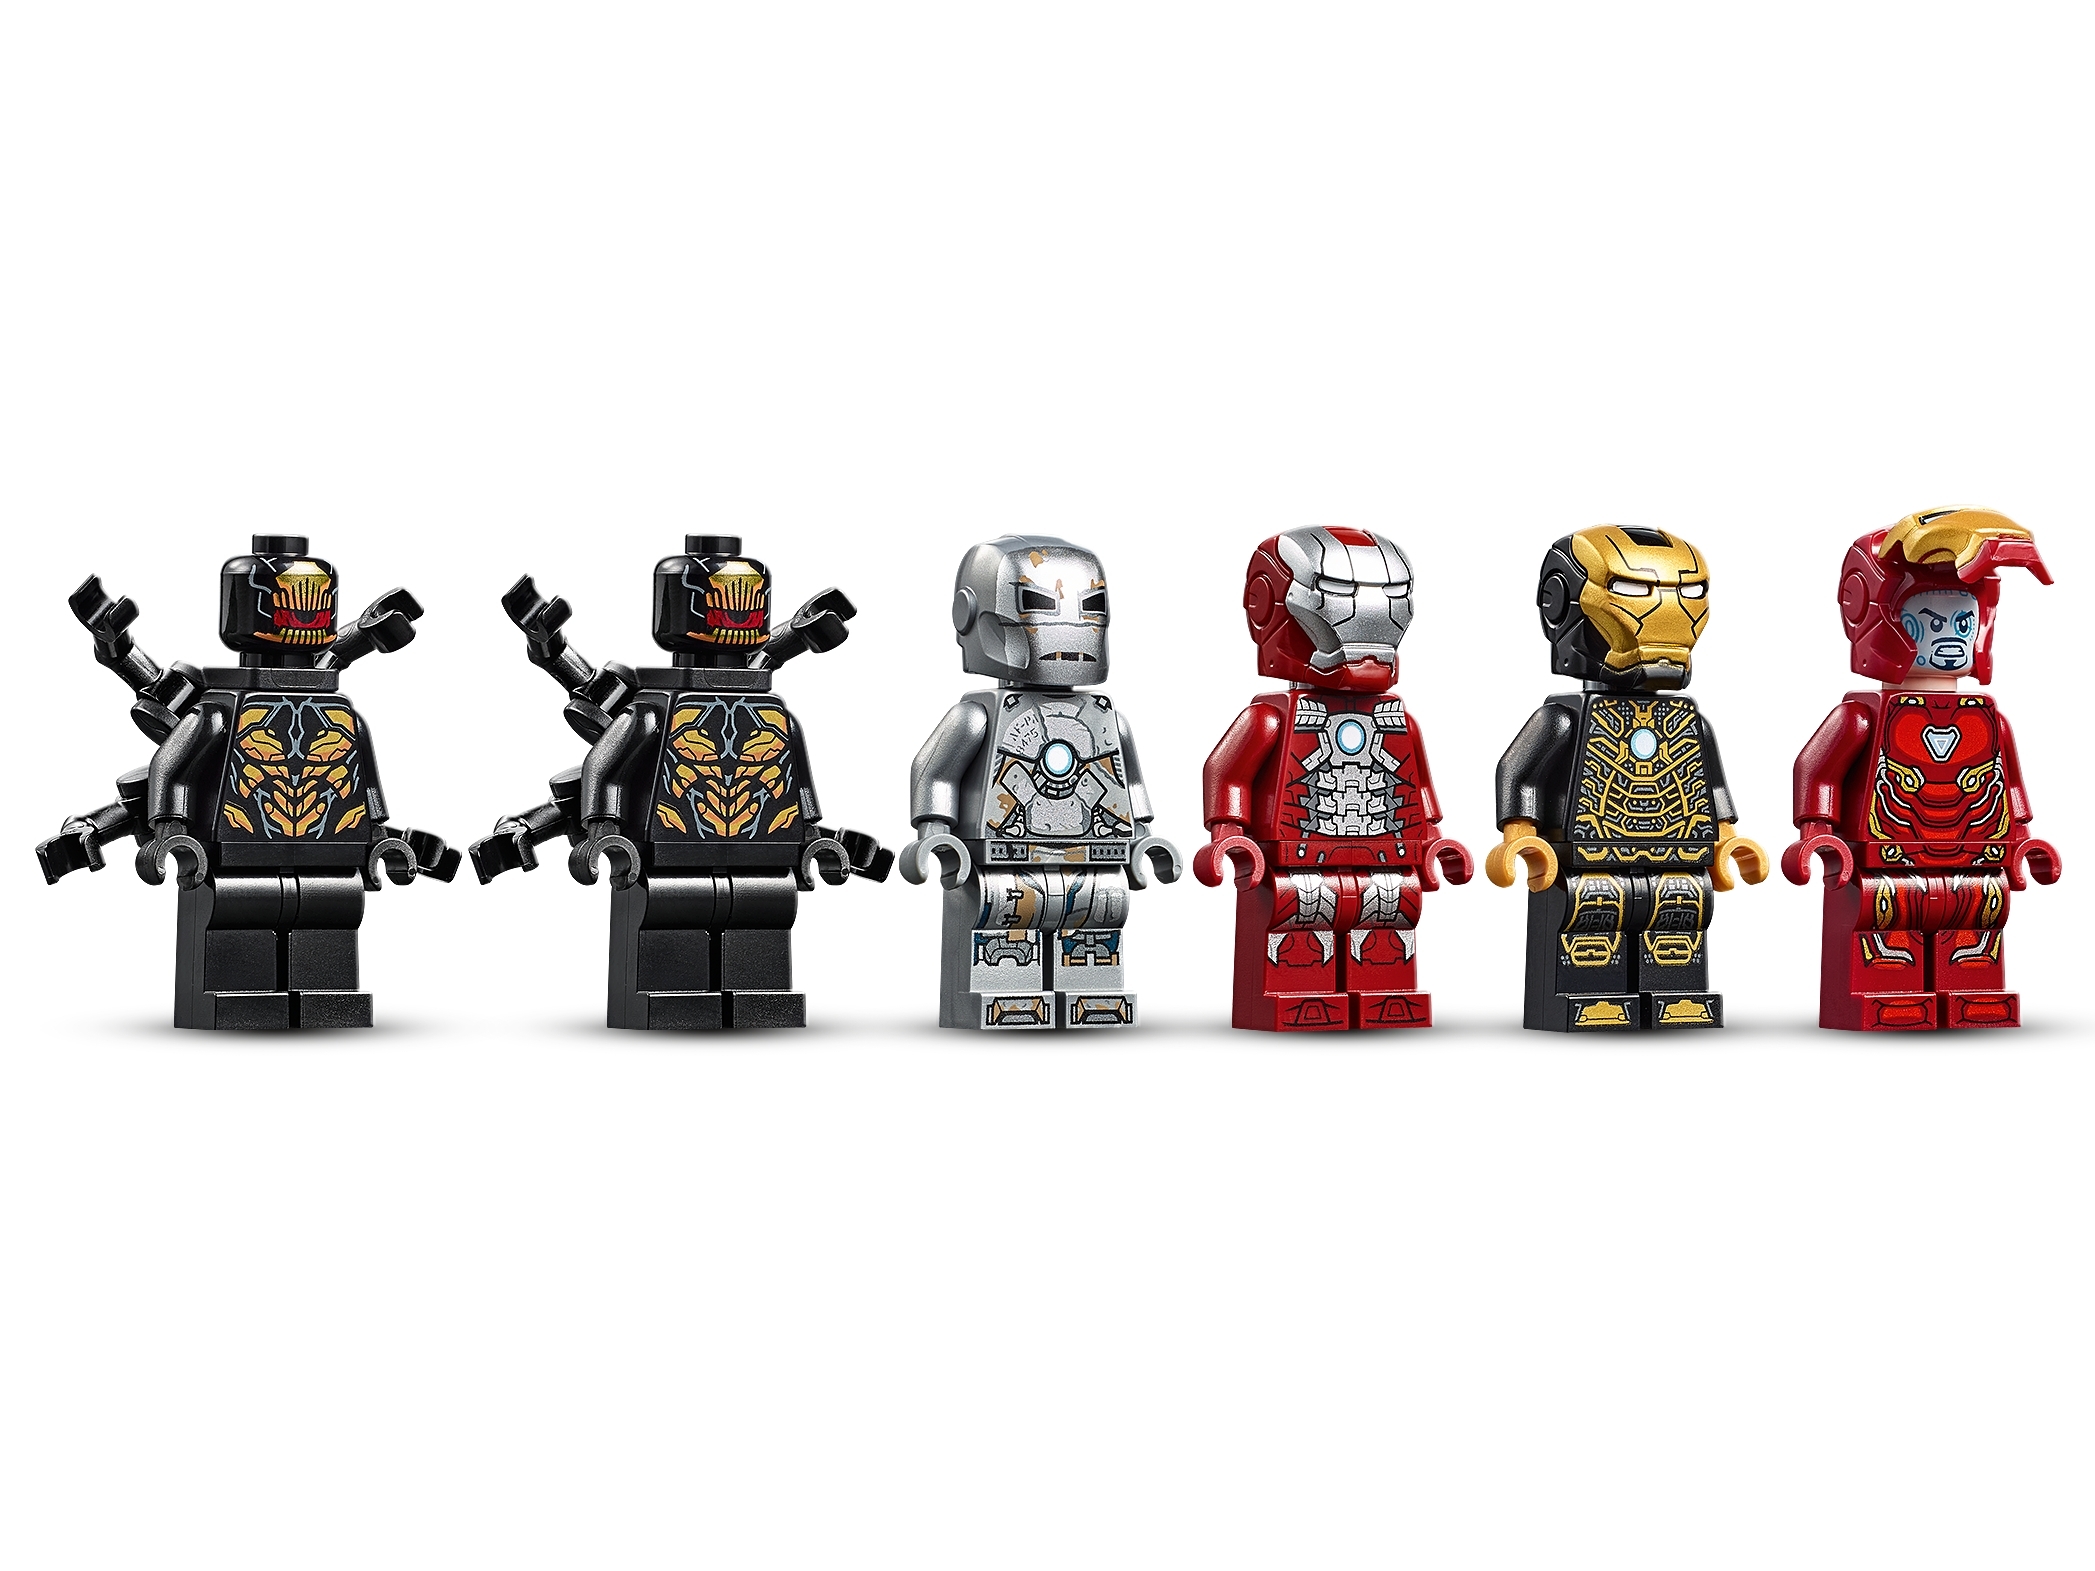 LEGO Marvel Avengers Iron Man Hall of Armor 76125 Building Kit - Tony Stark  Action Figure 